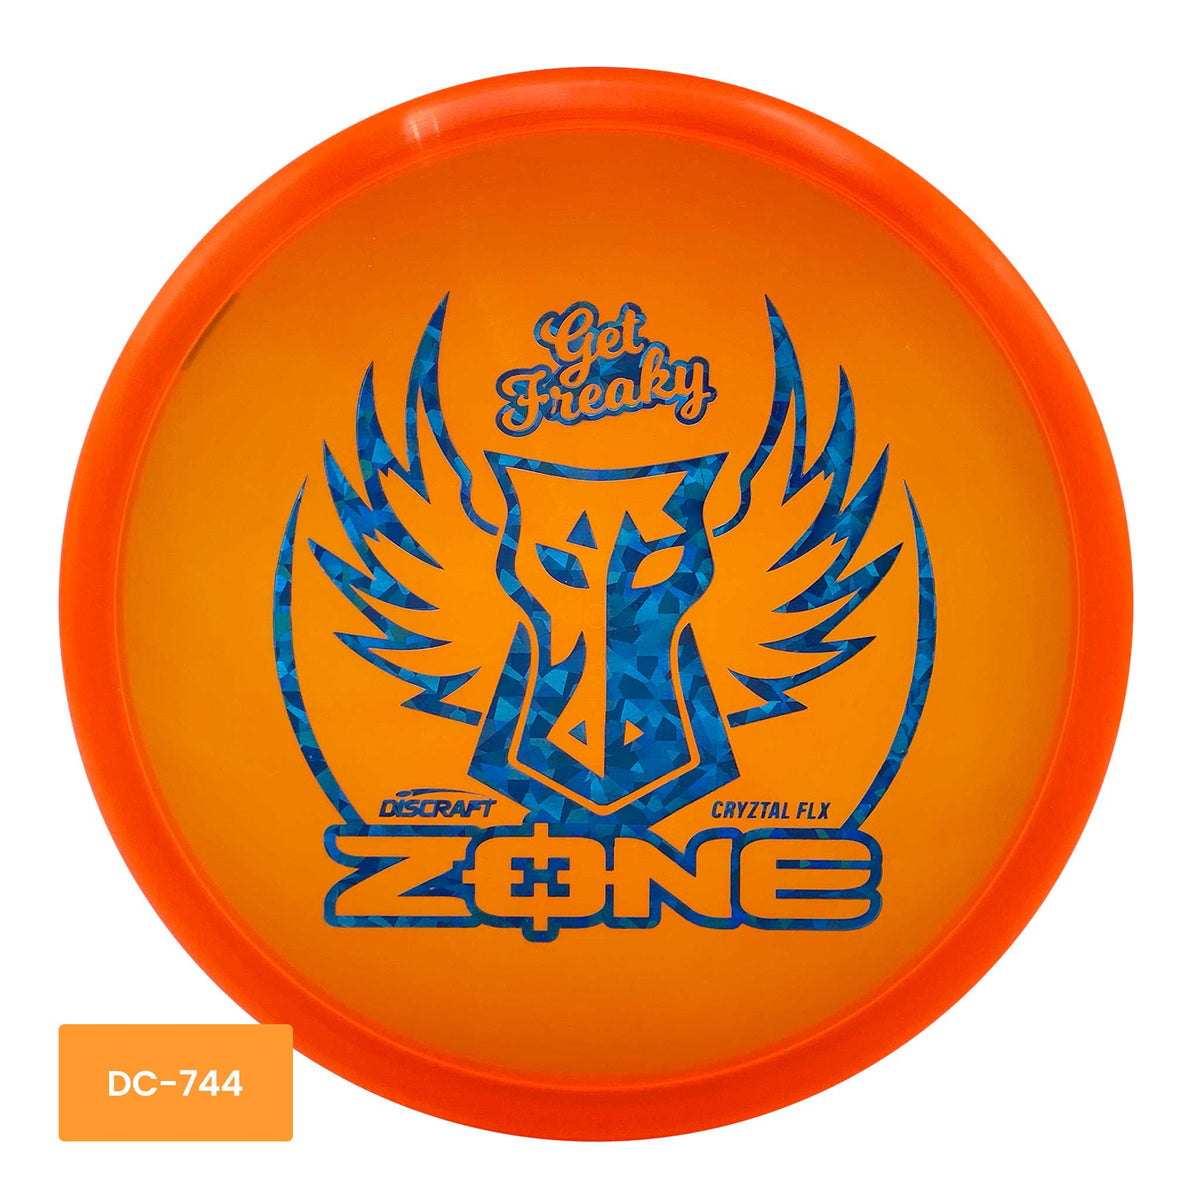 Discraft Brodie Smith CryZtal FLX Zone putter and approach - Orange